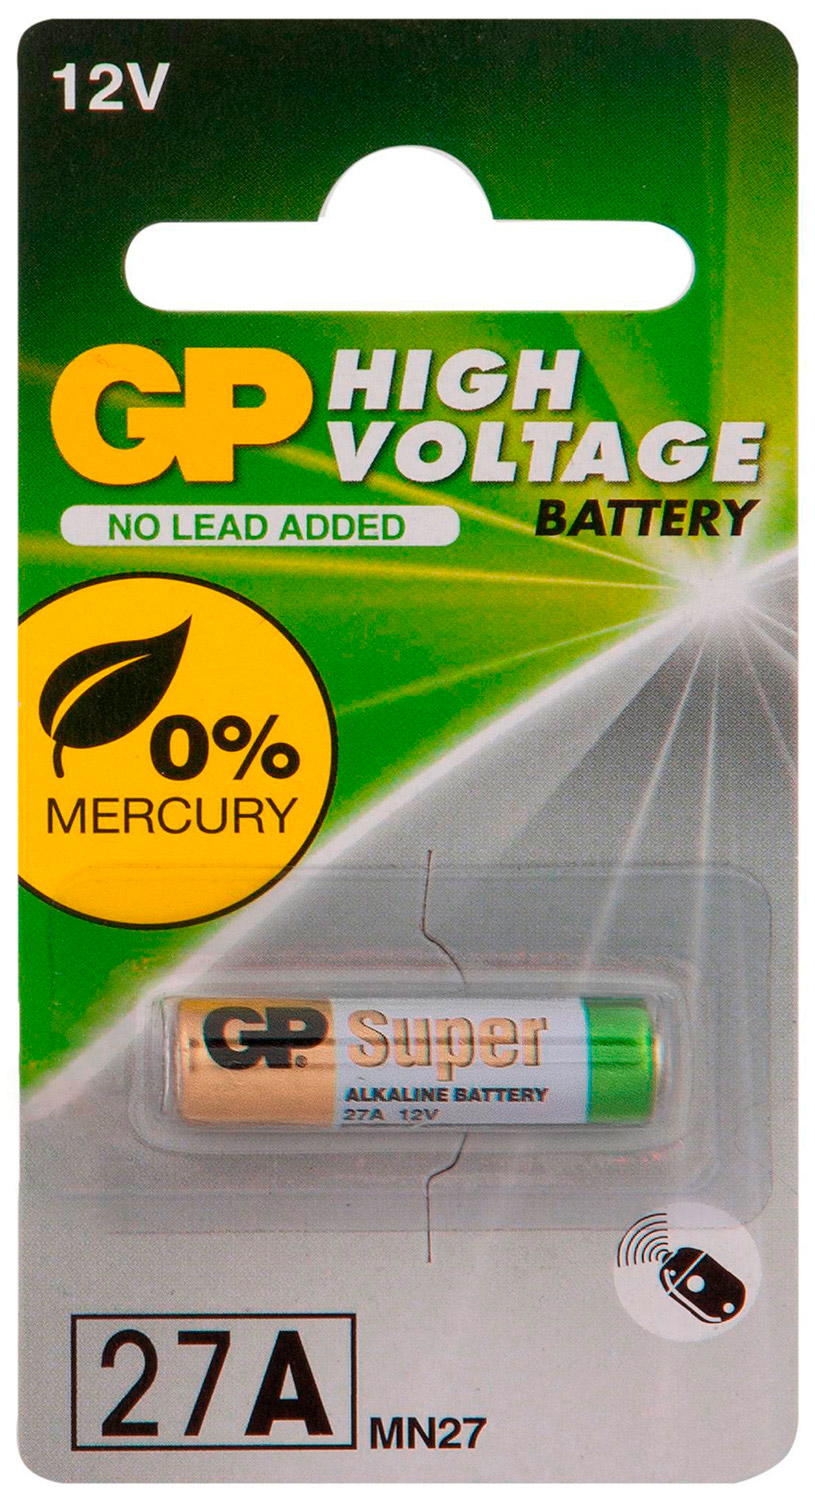 Батарейка GP 27A (MN27) с повышенной емкостью, 1 шт. 27AFRA-2C1 батарейка 27a gp alkaline high voltage bl1 27afra 2c1 1 штука